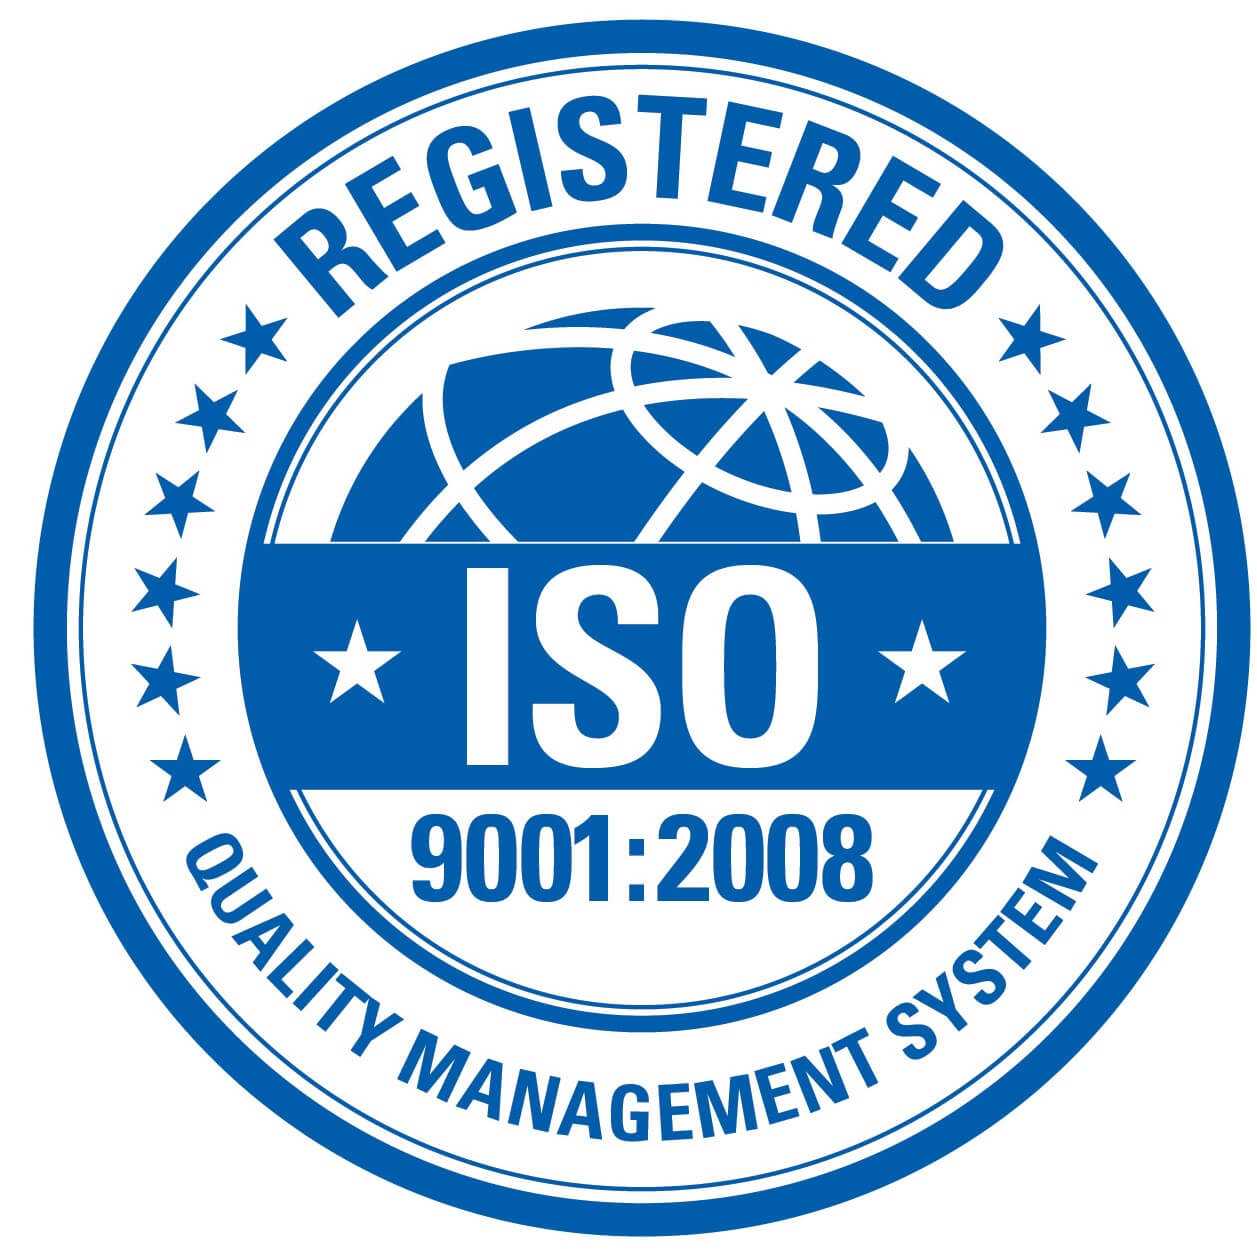 ISO 9001:2008 - استاندارد ایزو 9001 - استاندارد تاپکو - استاندارد سیستم مدیریت کیفیت  - محصول با کیفیت - استاندارد تاپشیت - پی وی سی استاندارد